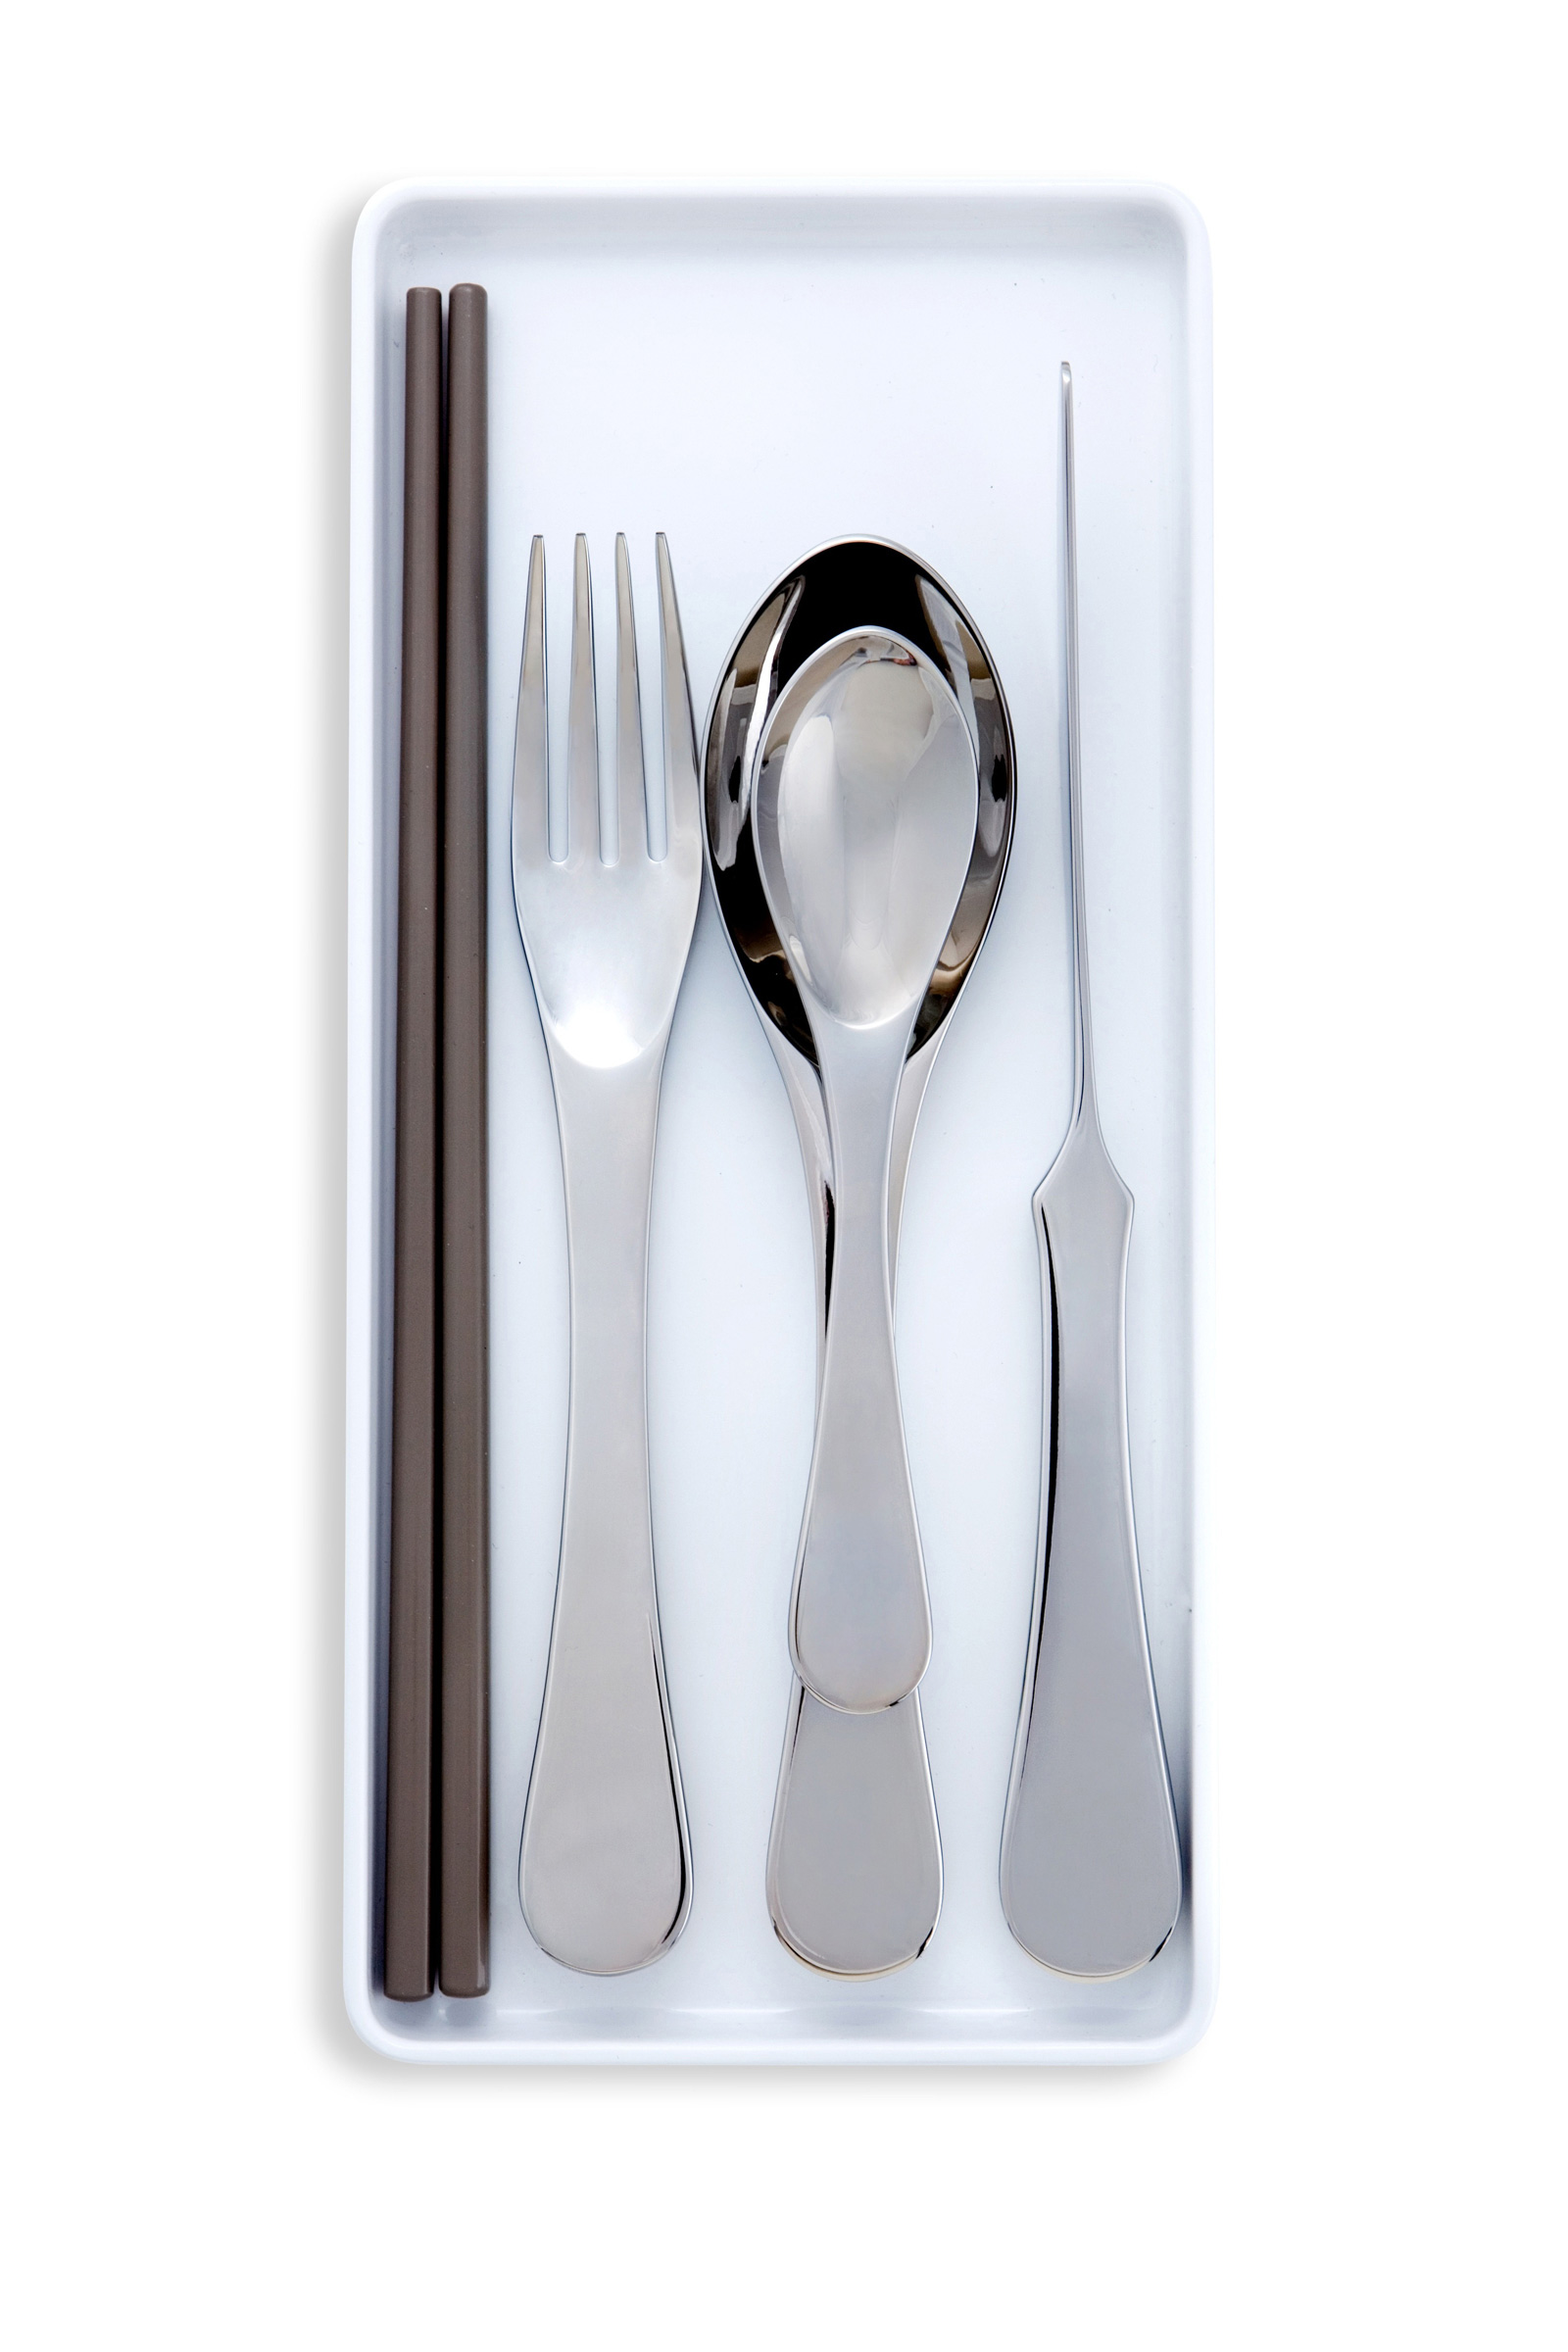 iD/cutlery